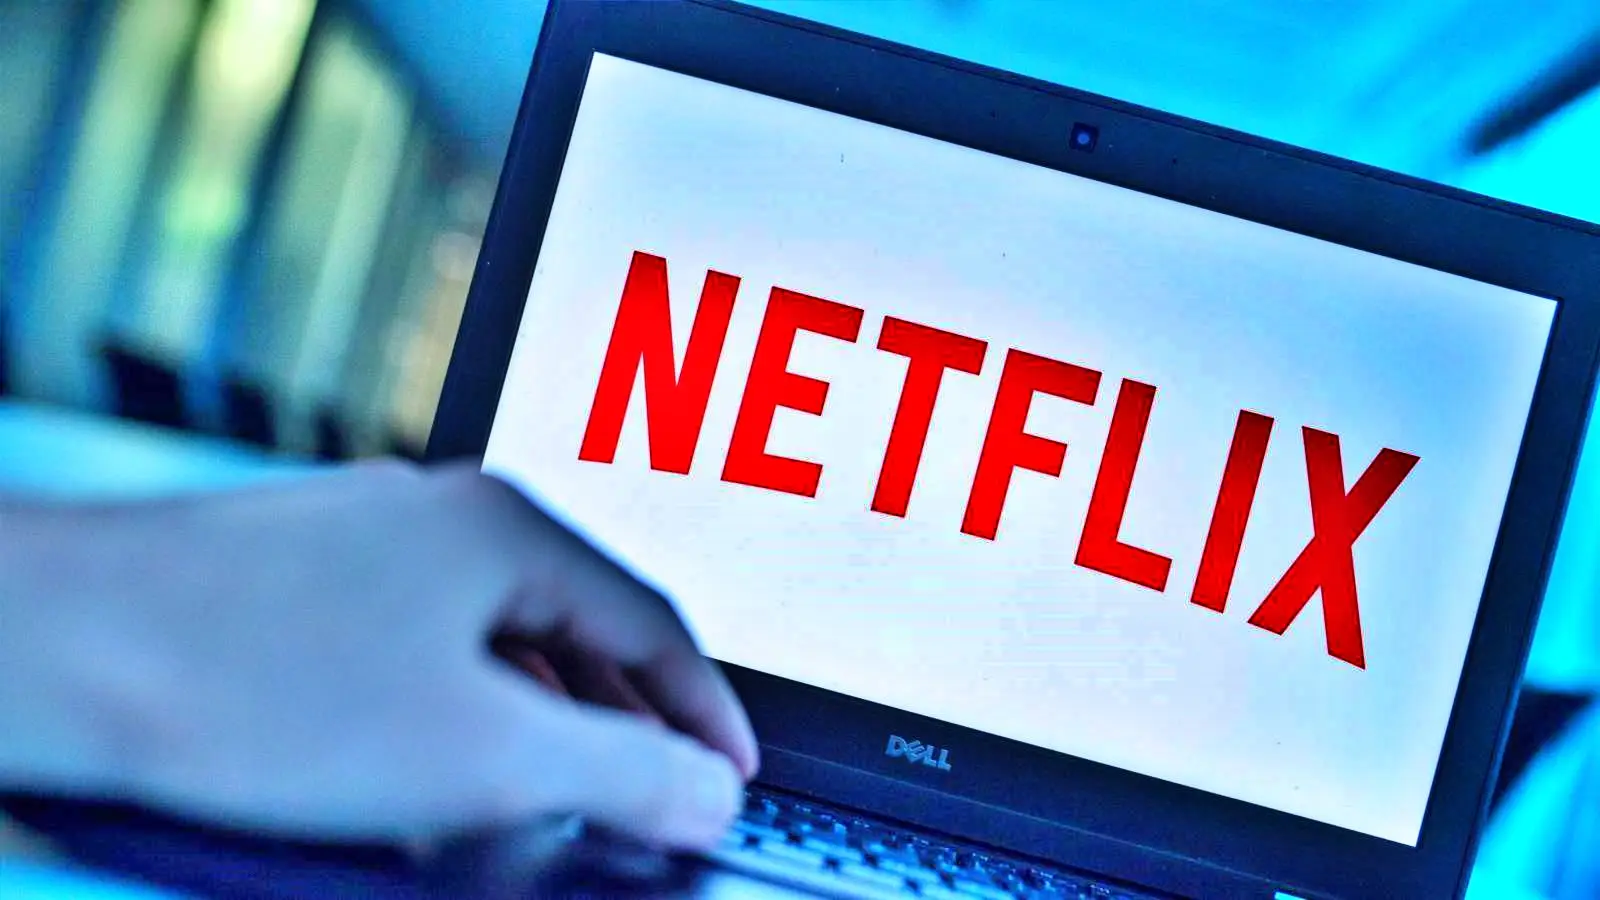 Mesajul Netflix Romani Transmite Compania Special Romania